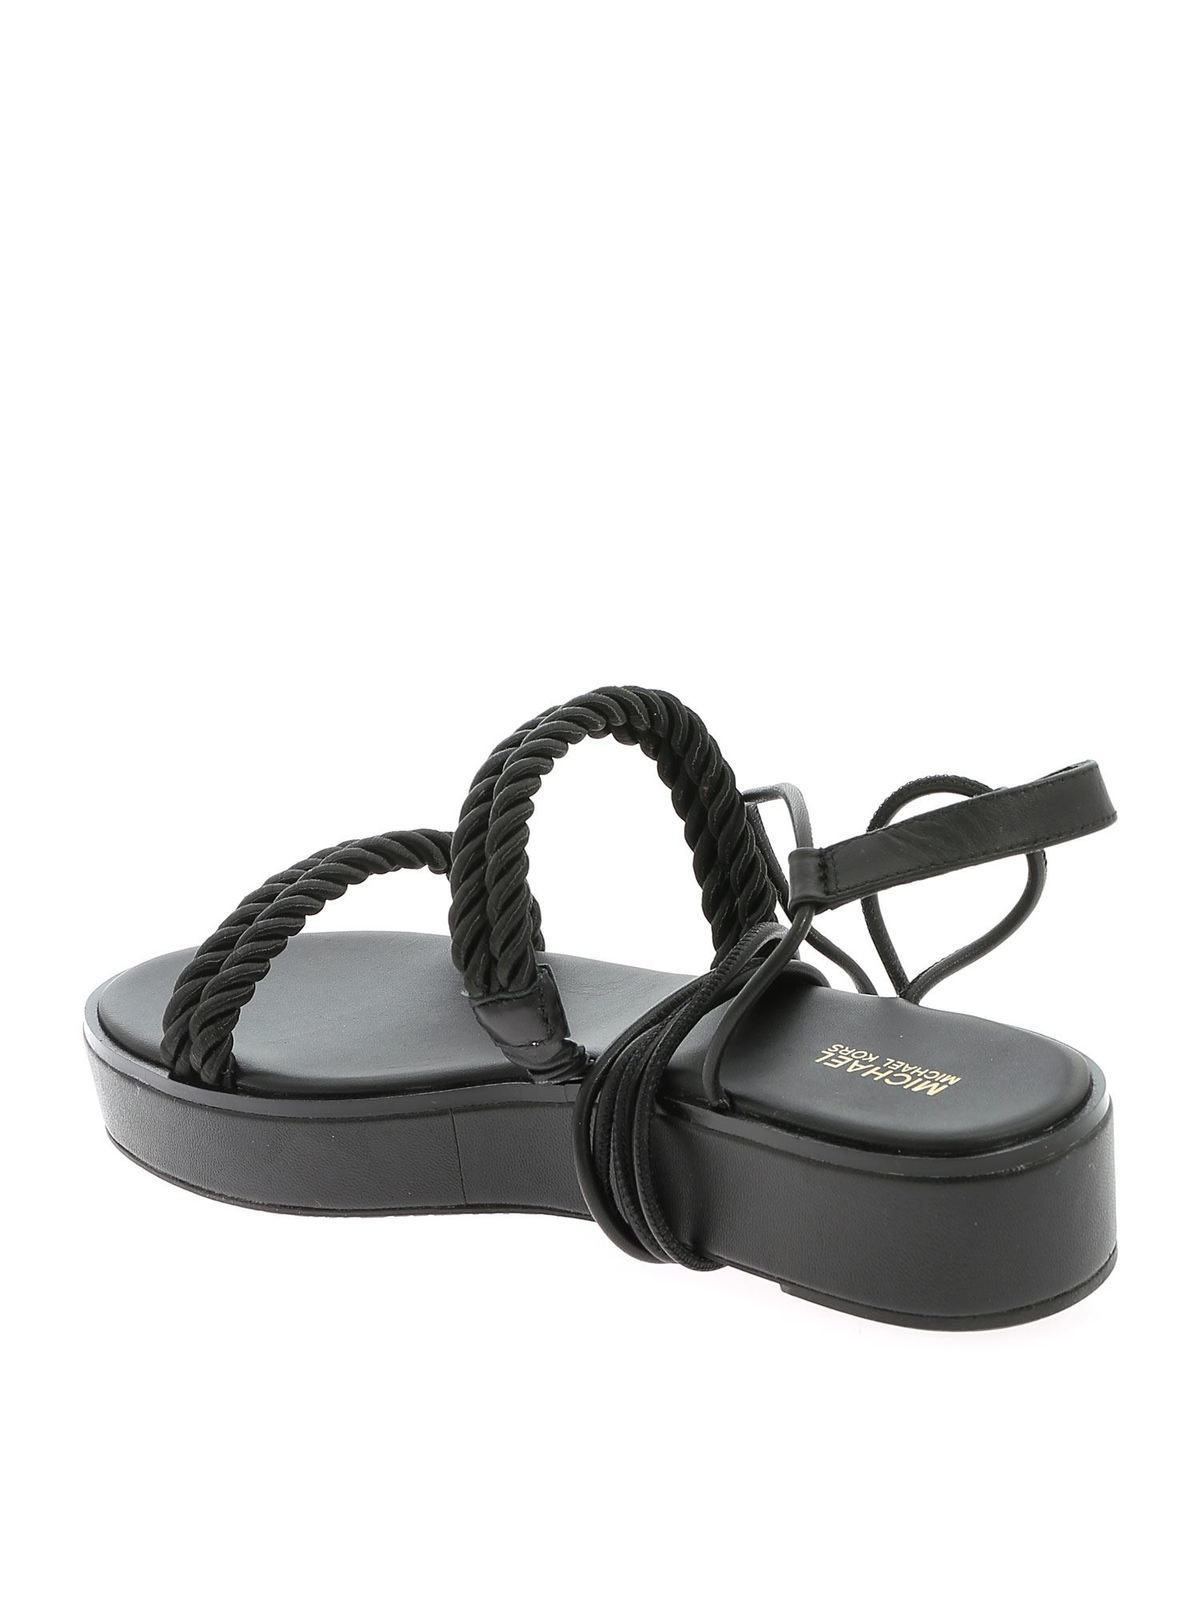 Sandals Michael Kors - Marina sandals in black - 40S1MRFA2D001 | iKRIX.com